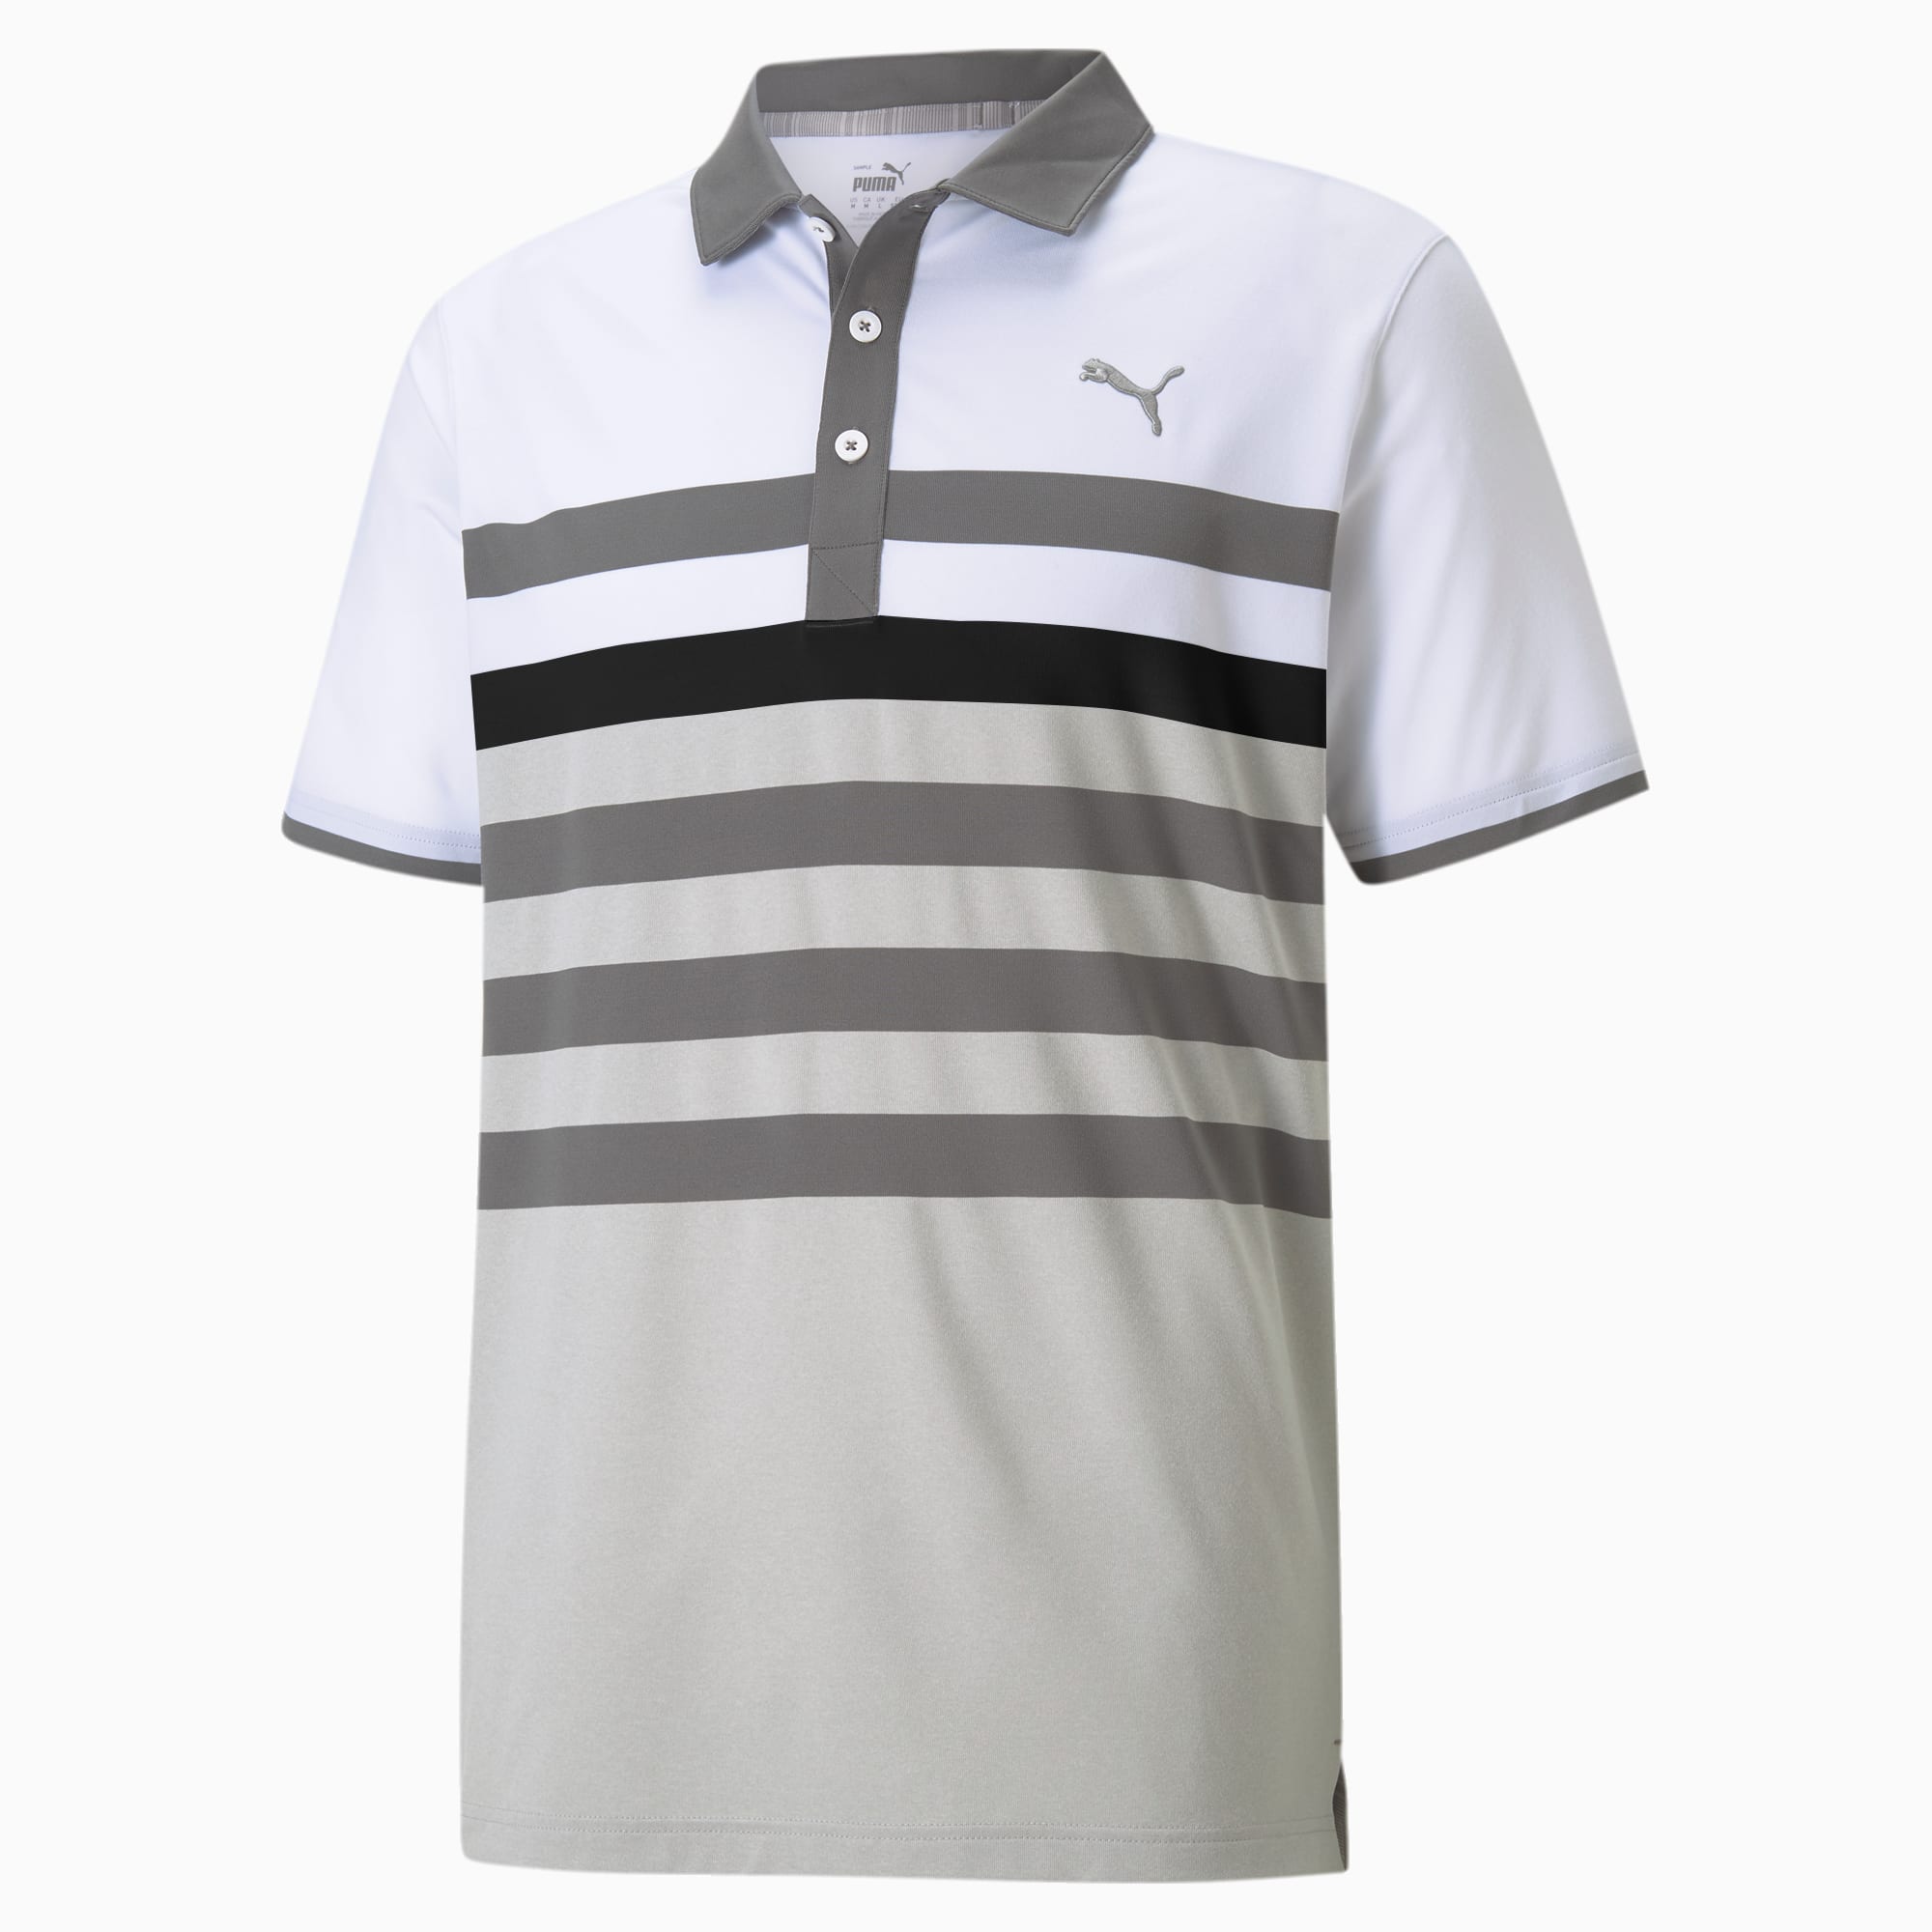 MATTR One Way Men's Golf Polo Shirt | PUMA